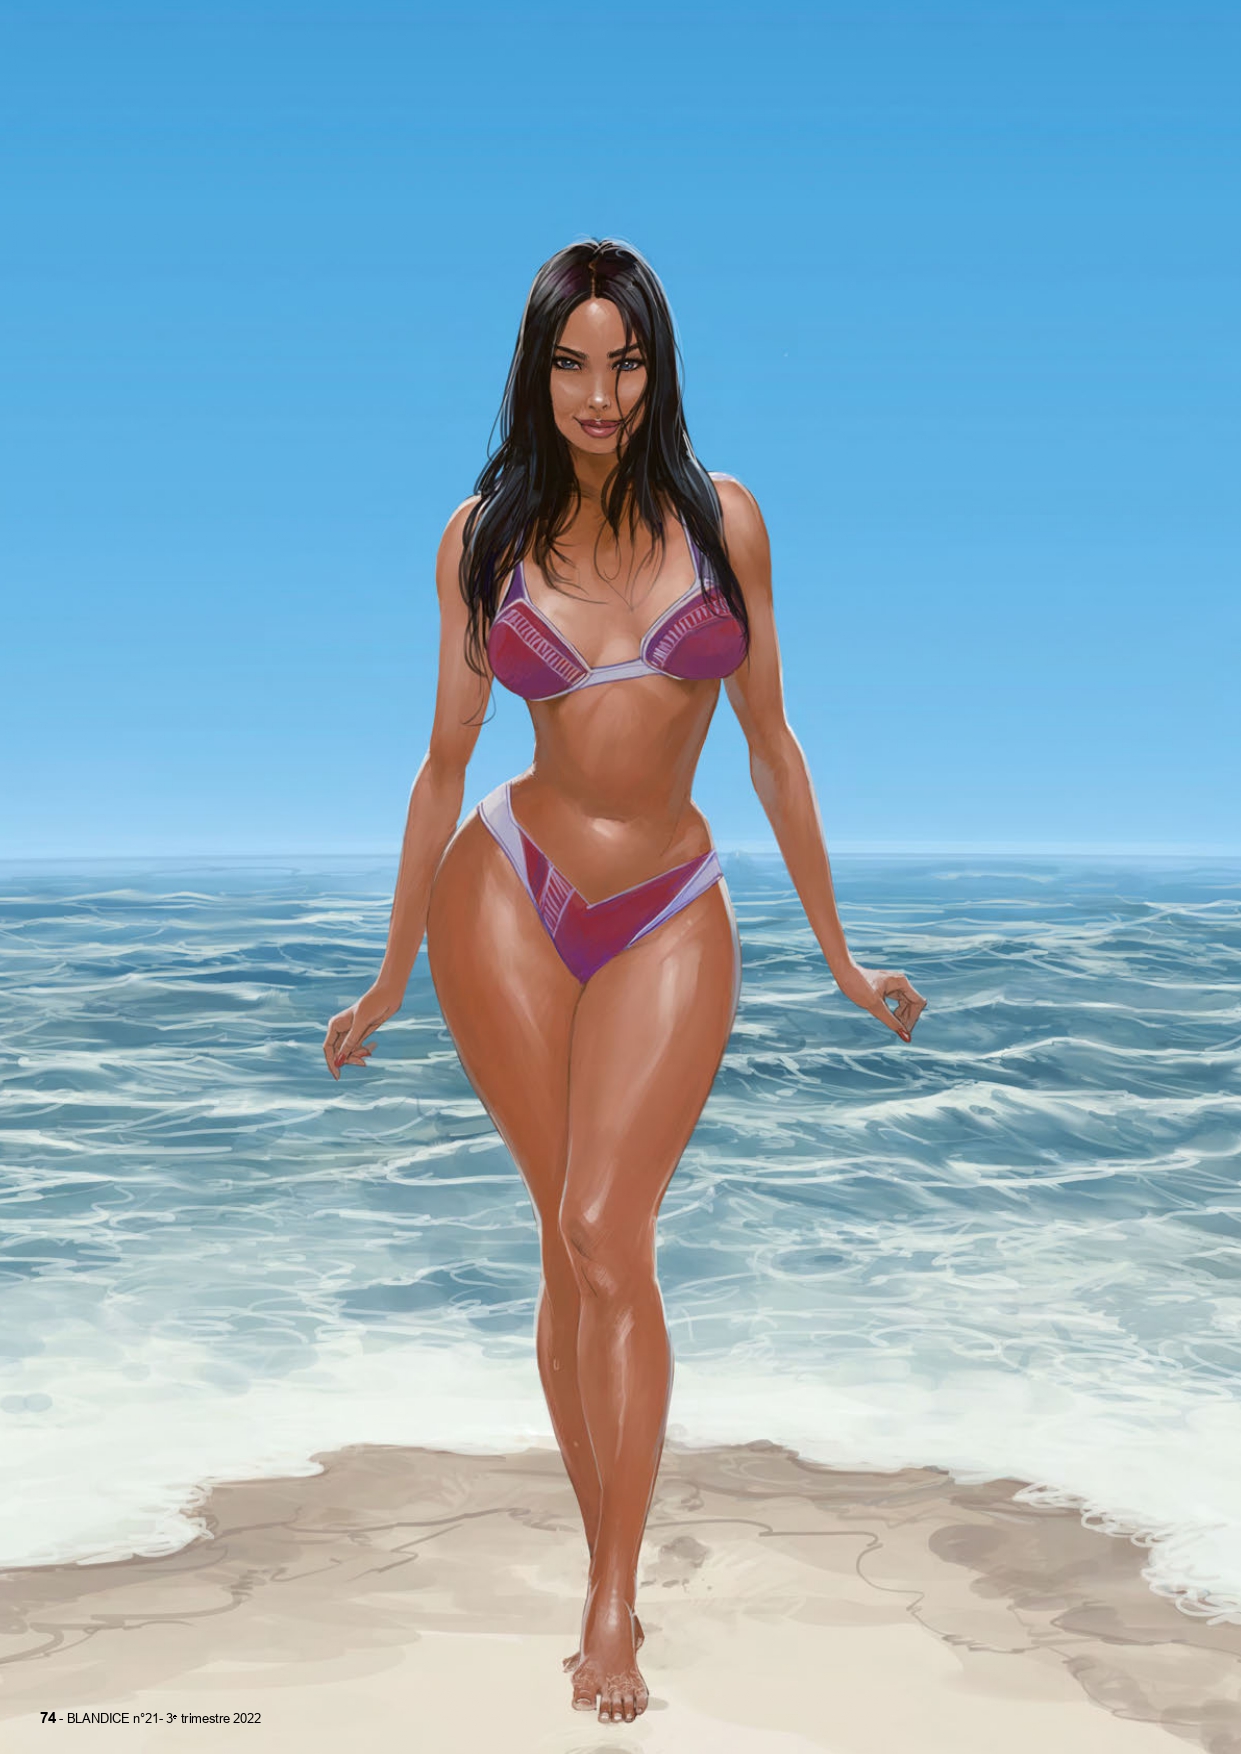 Blandice - 21 - Bikini numero d'image 75